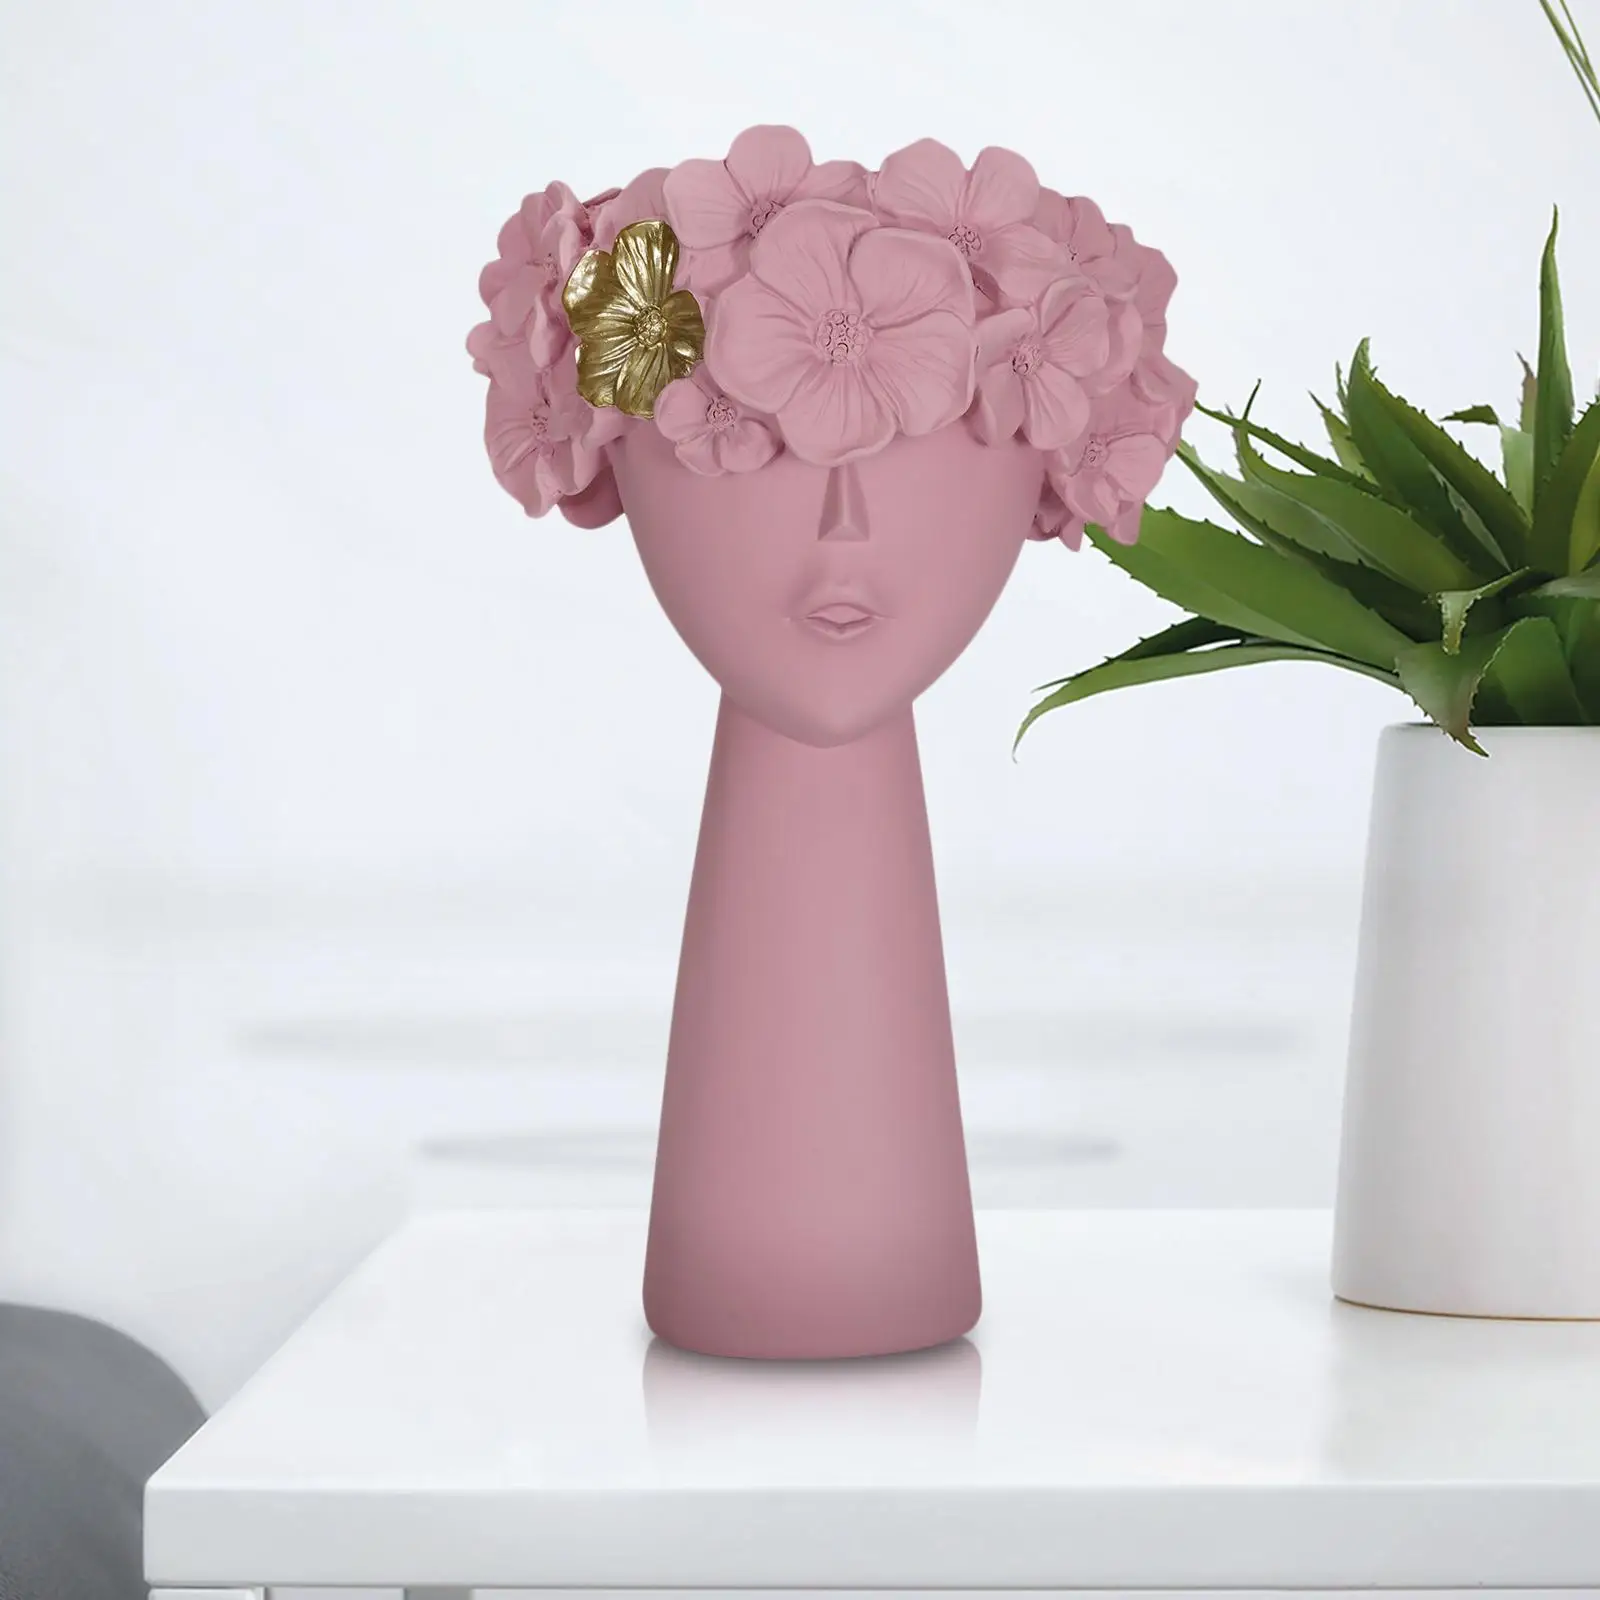 Human Head Shaped Dry Flower Vase Plants Planter Pot Wedding Home Desk Decor